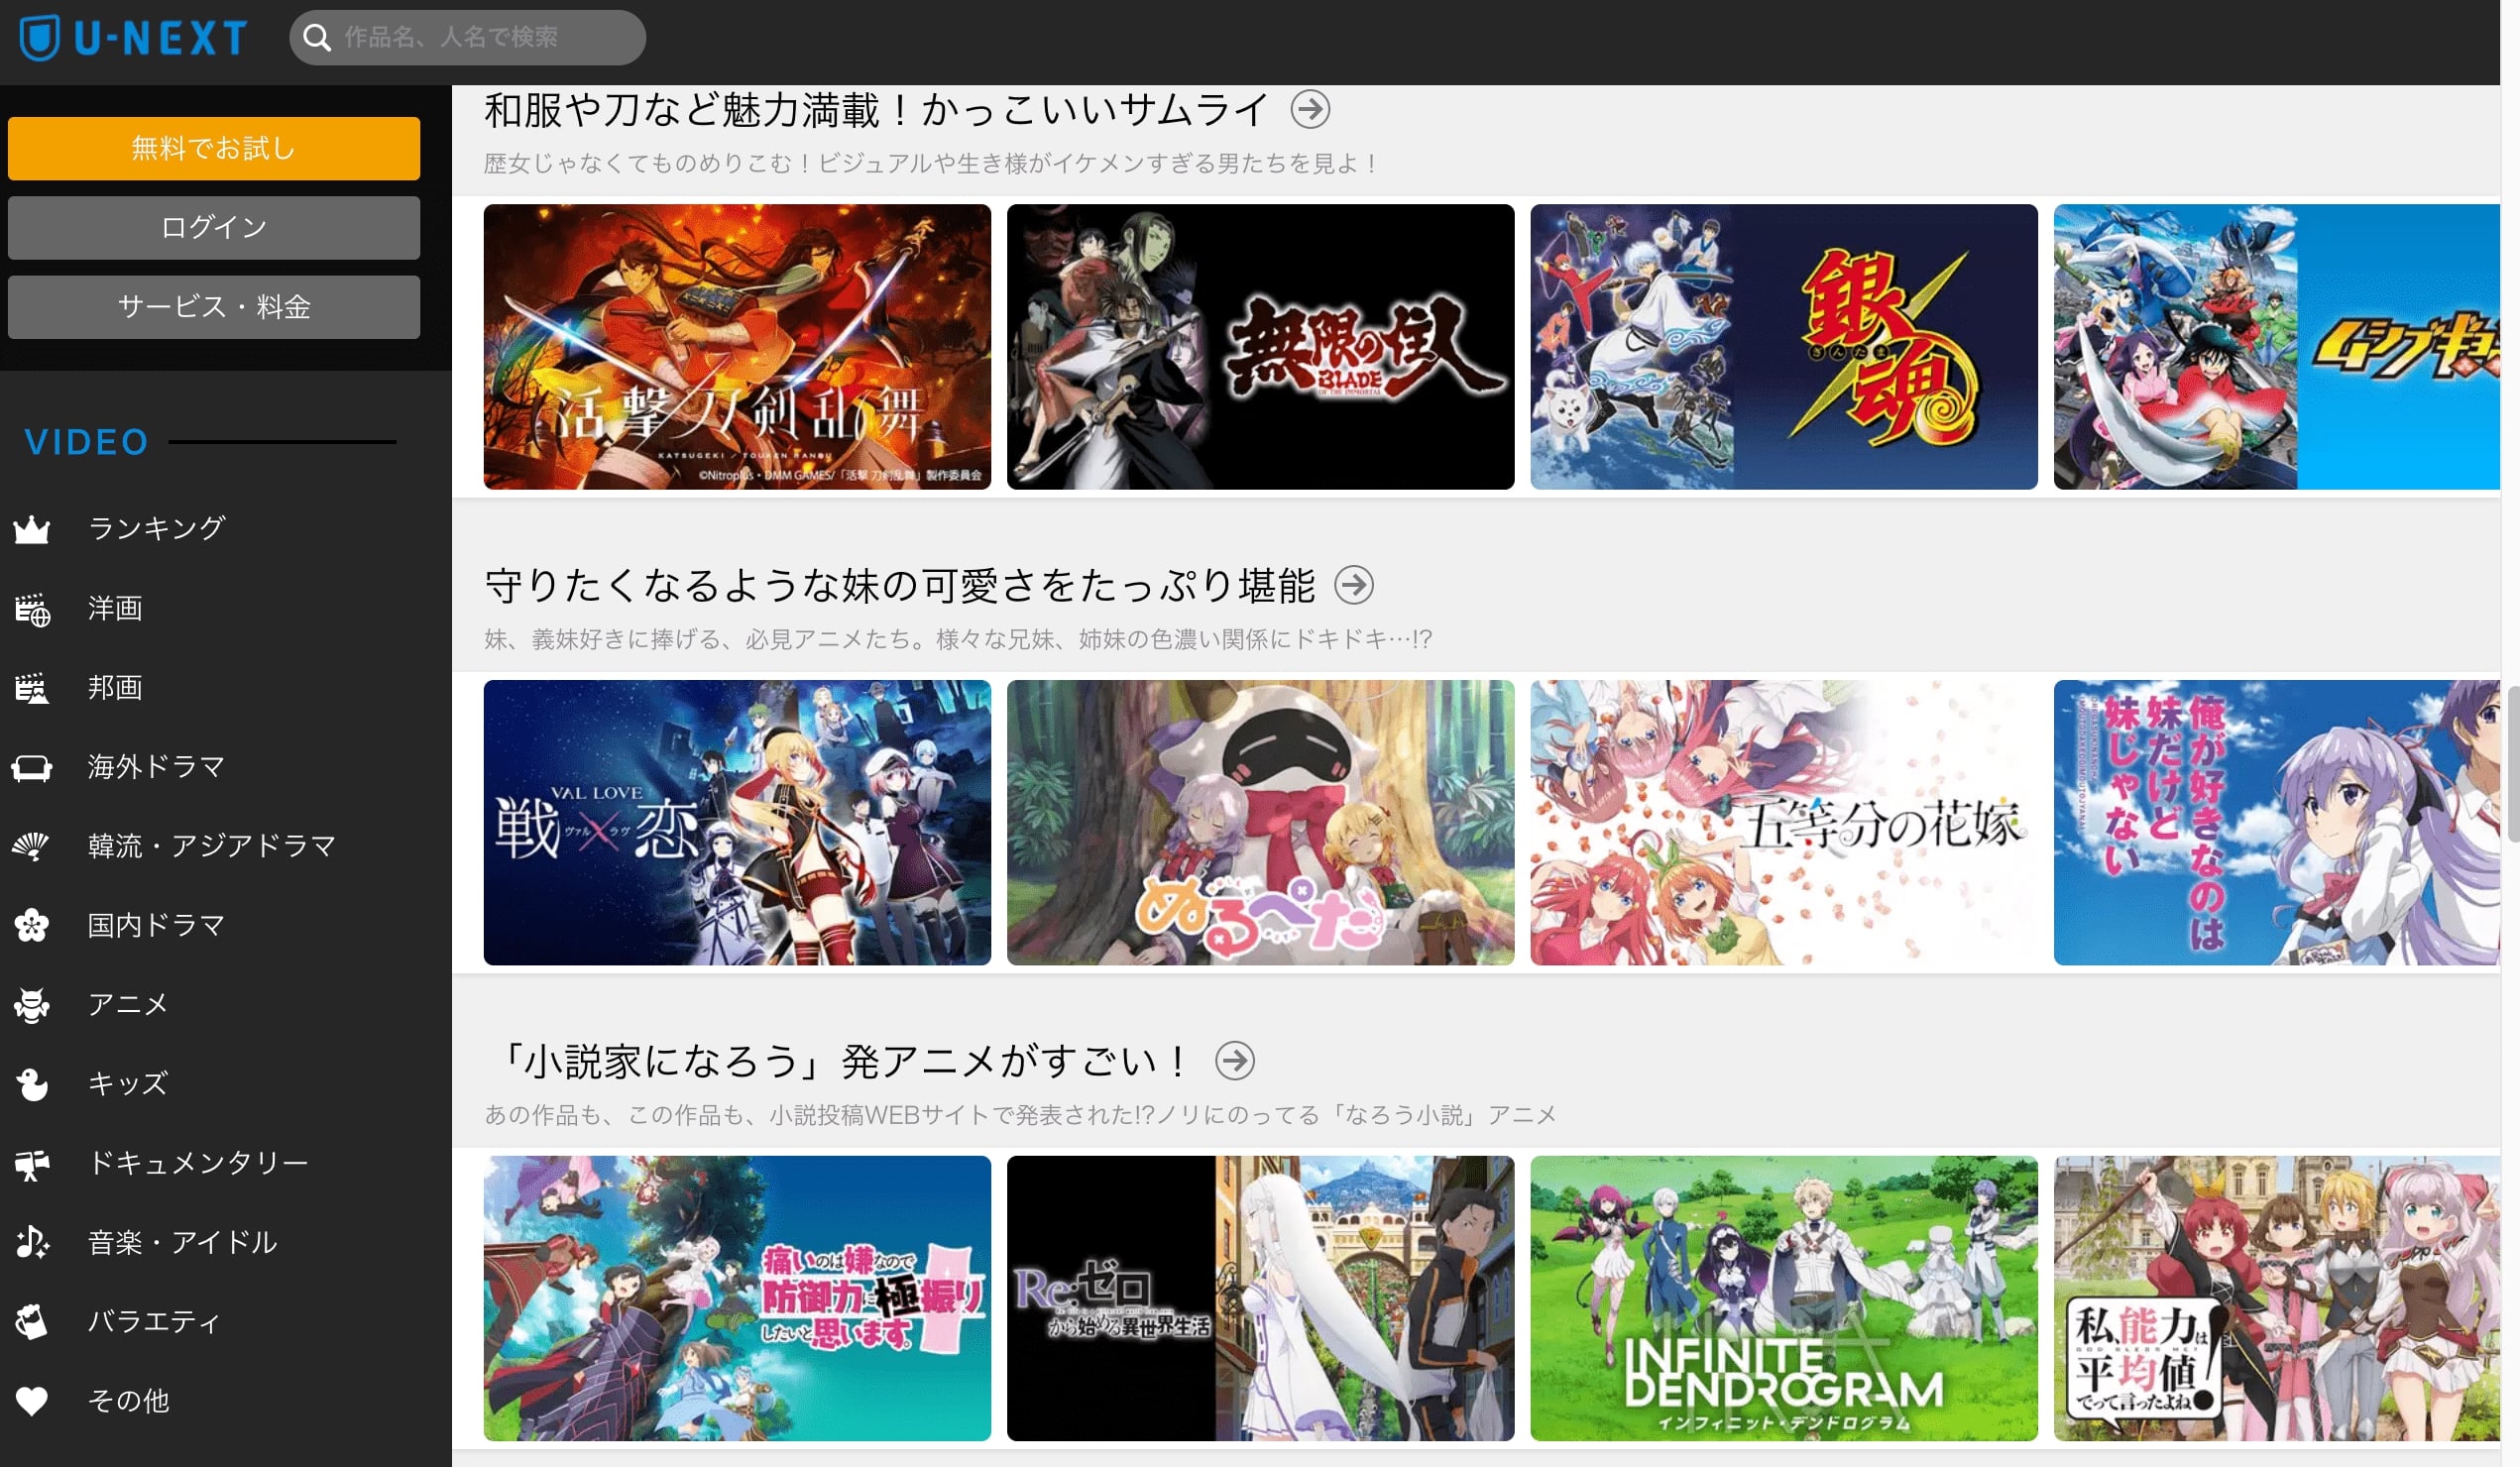 10 Best Anime Streaming Sites - Japan Web Magazine